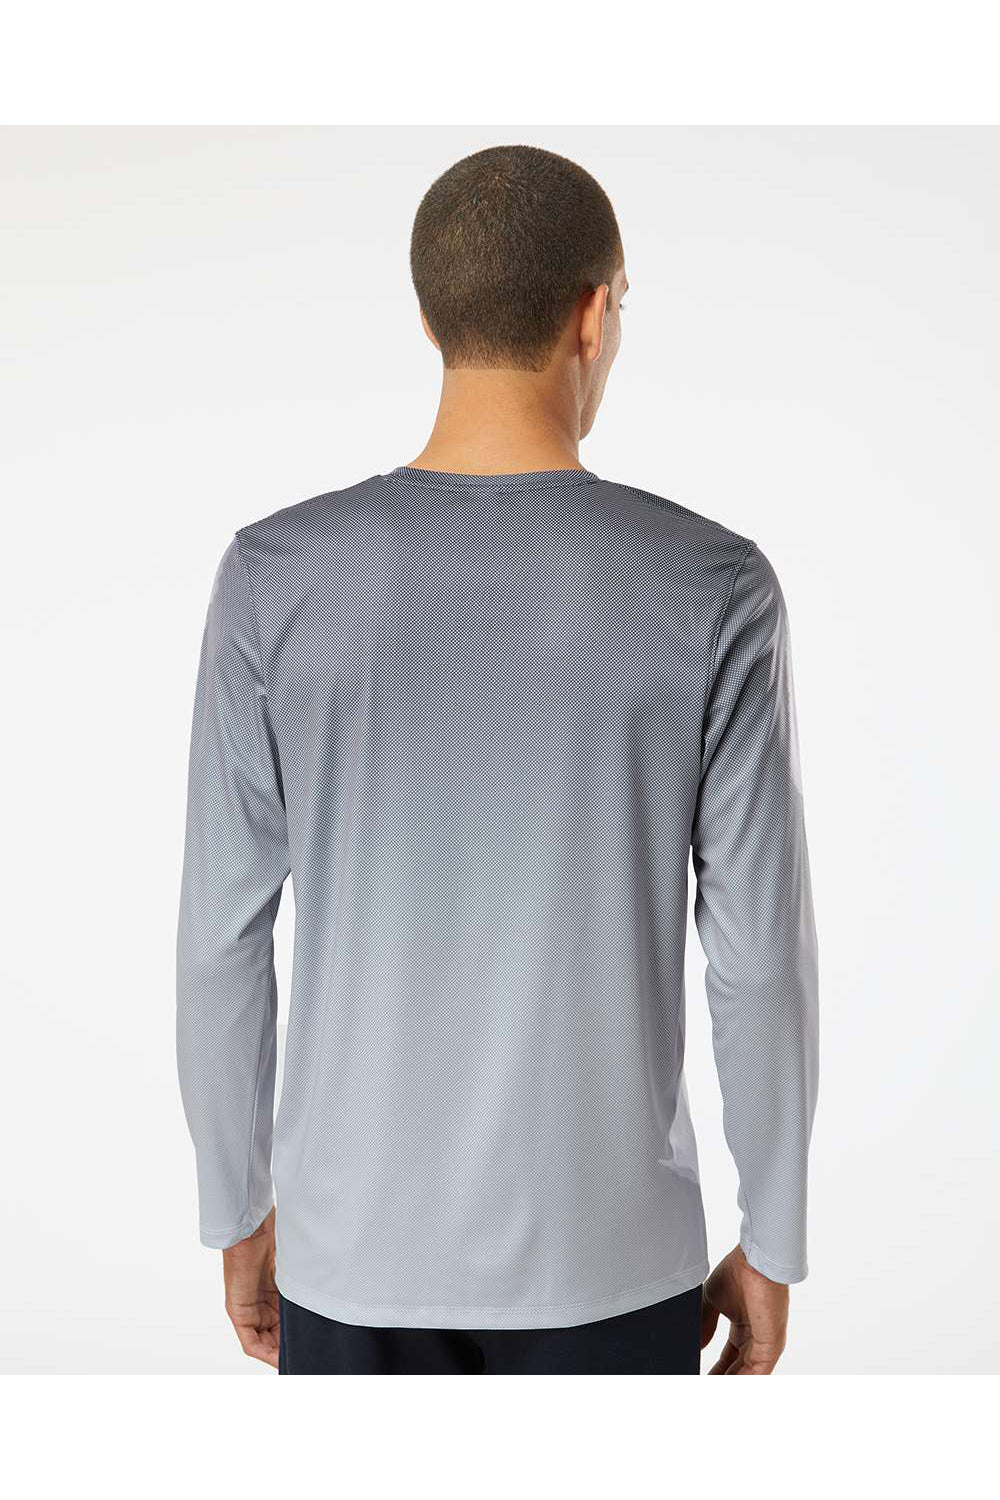 Paragon 225 Mens Barbados Performance Pin Dot Long Sleeve Crewneck T-Shirt Black/Light Charcoal Grey Model Back